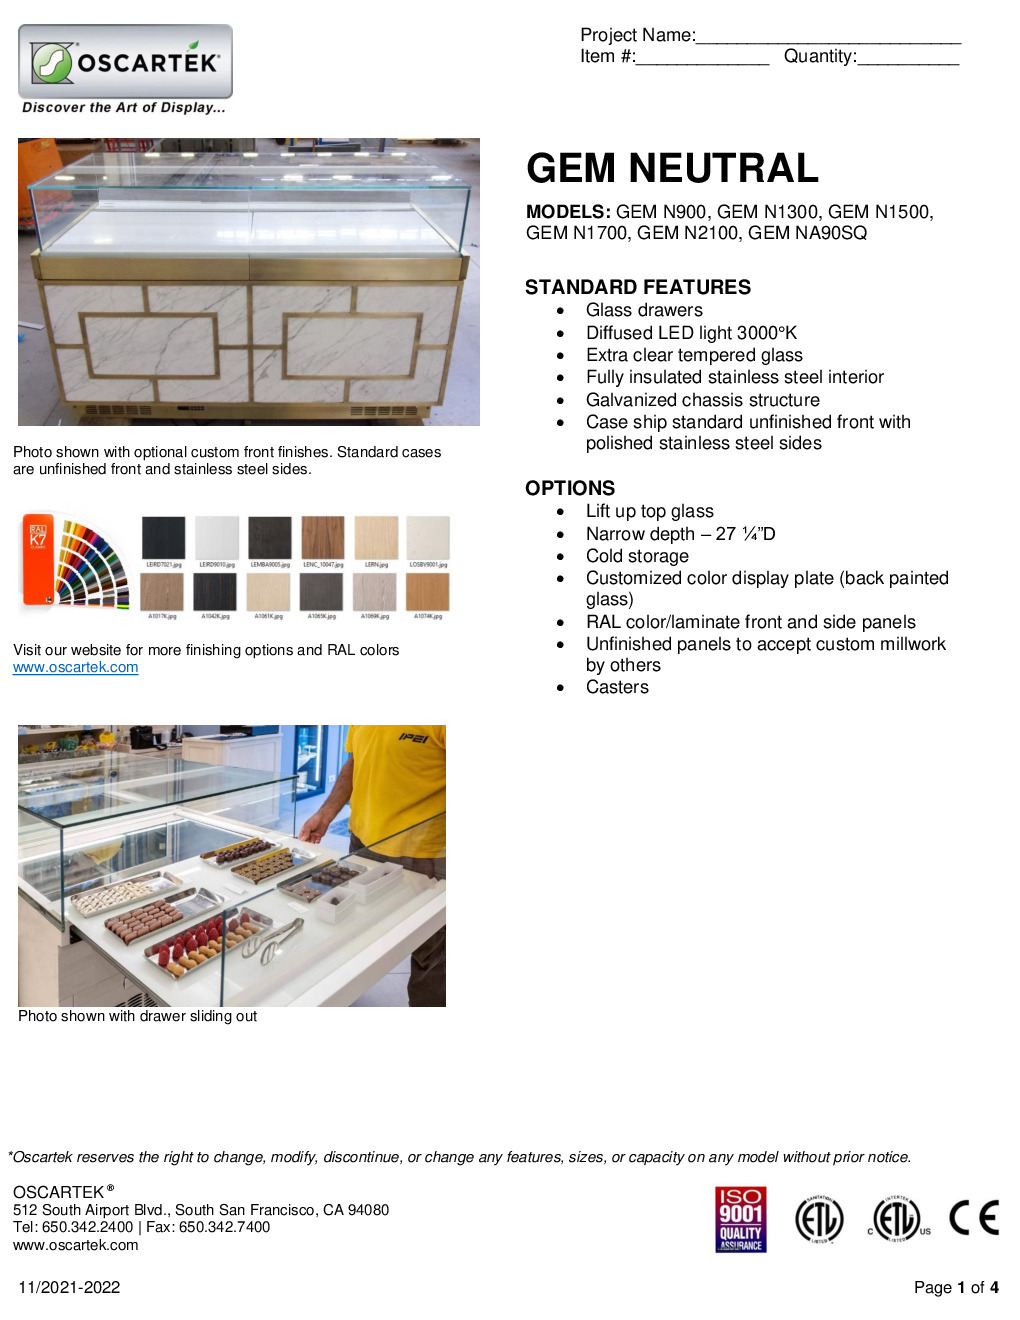 Oscartek GEM N1500 Non-Refrigerated Bakery Display Case